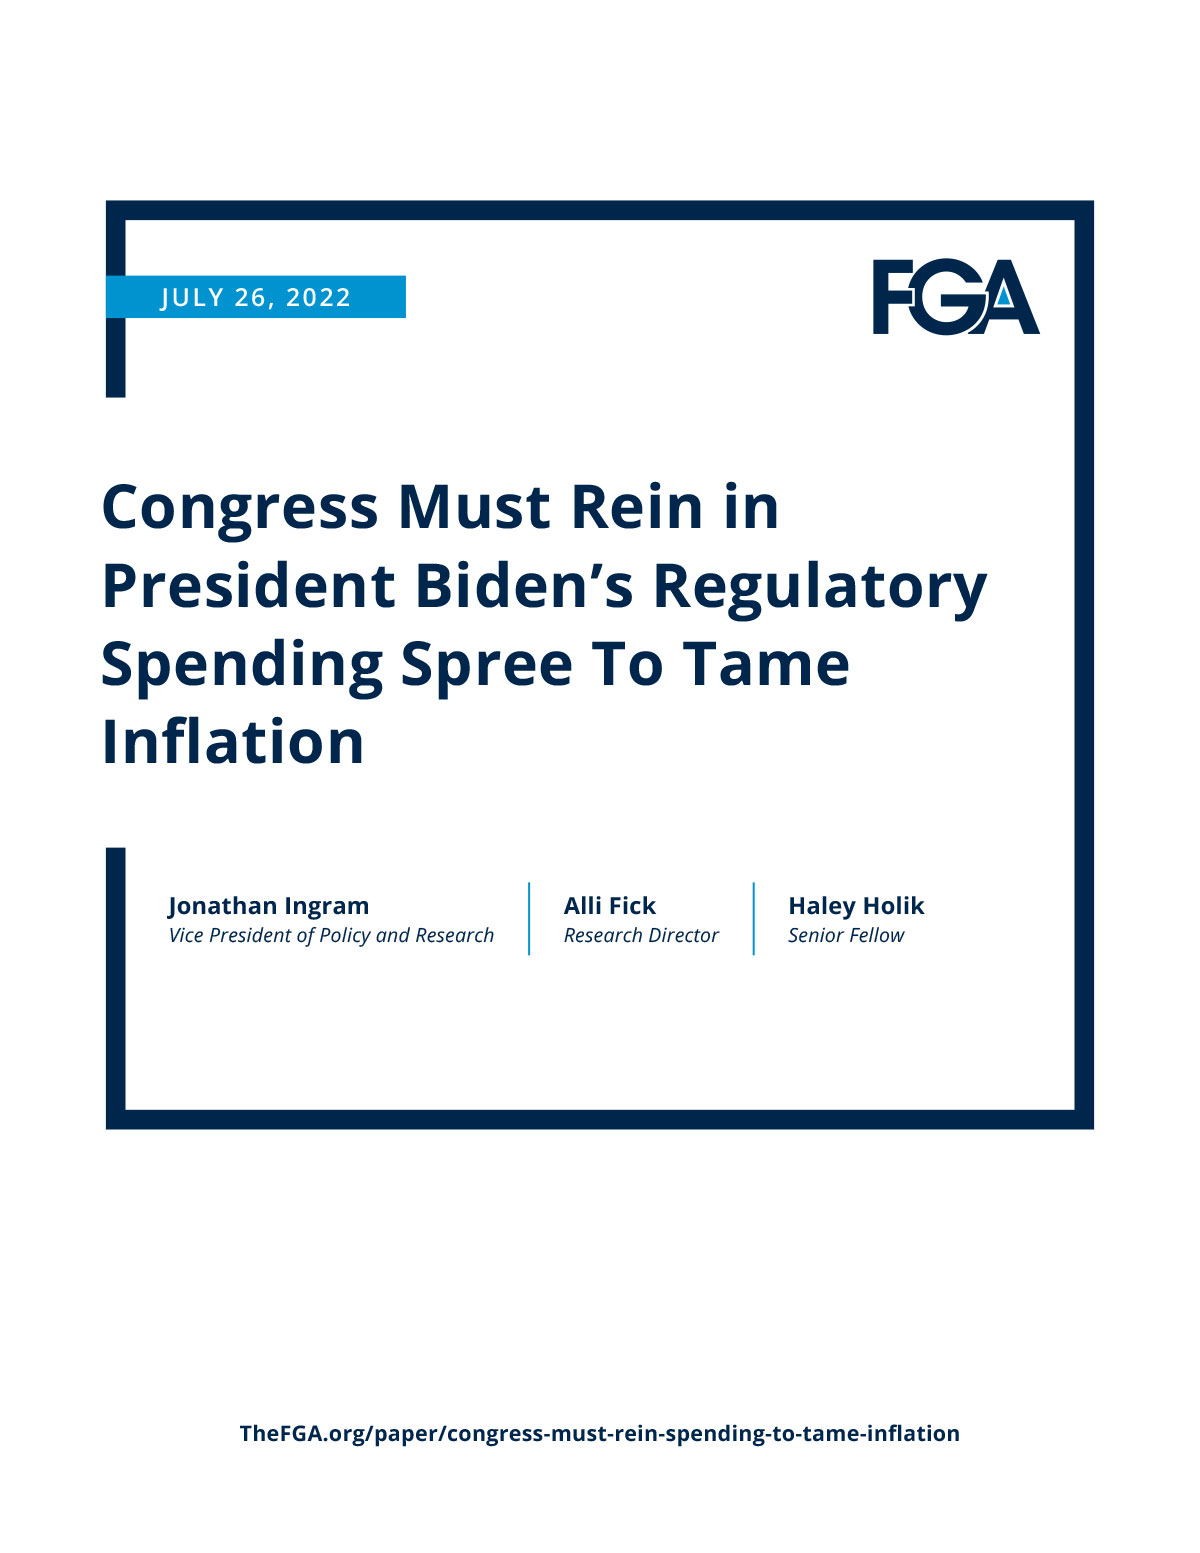 Congress Must Rein in President Biden’s Regulatory Spending Spree to Tame Inflation